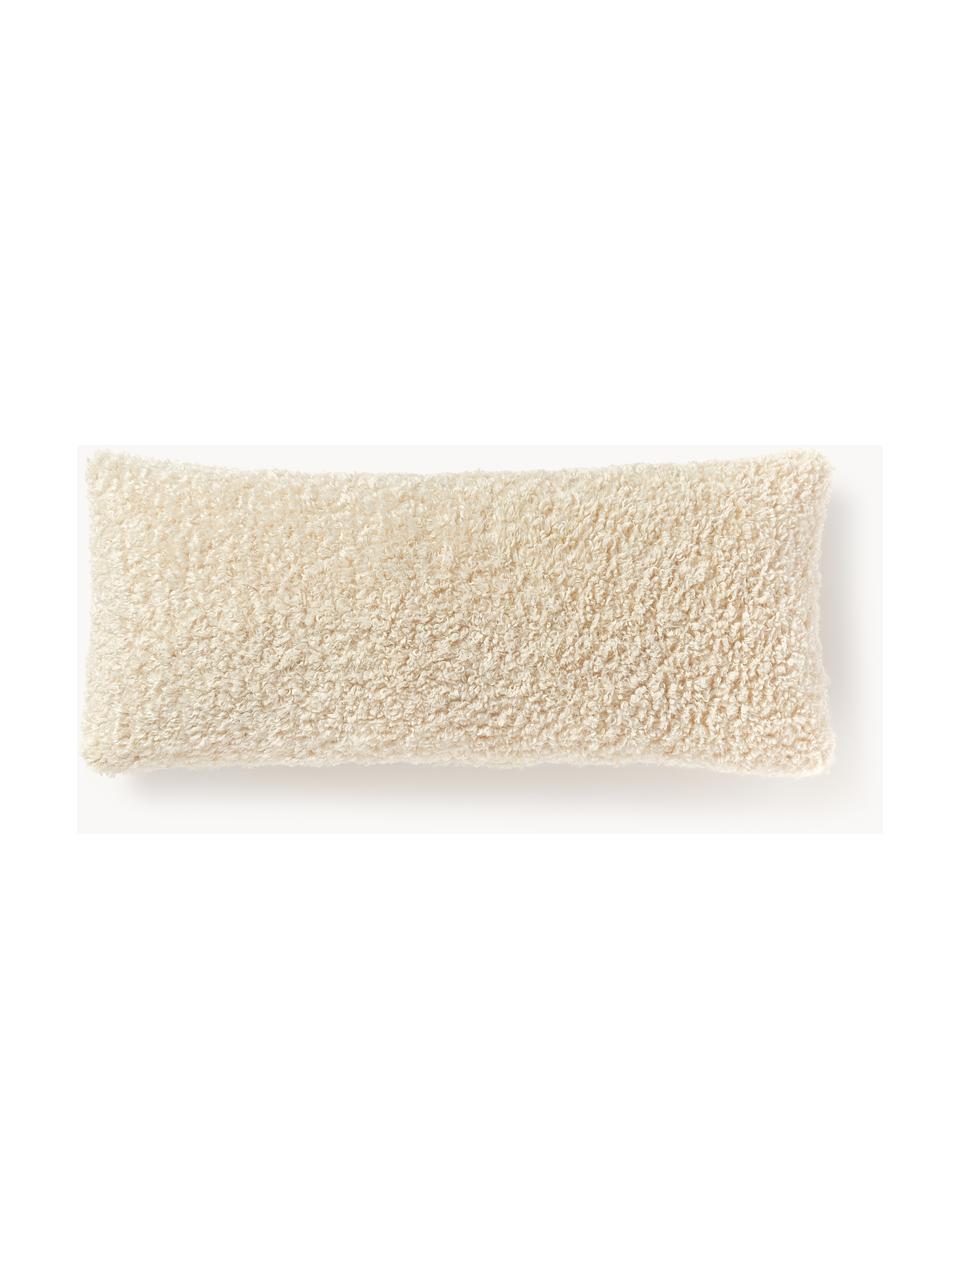 Copricuscino in teddy Dotty, 100% poliestere (teddy), Bianco crema, Larg. 30 x Lung. 70 cm